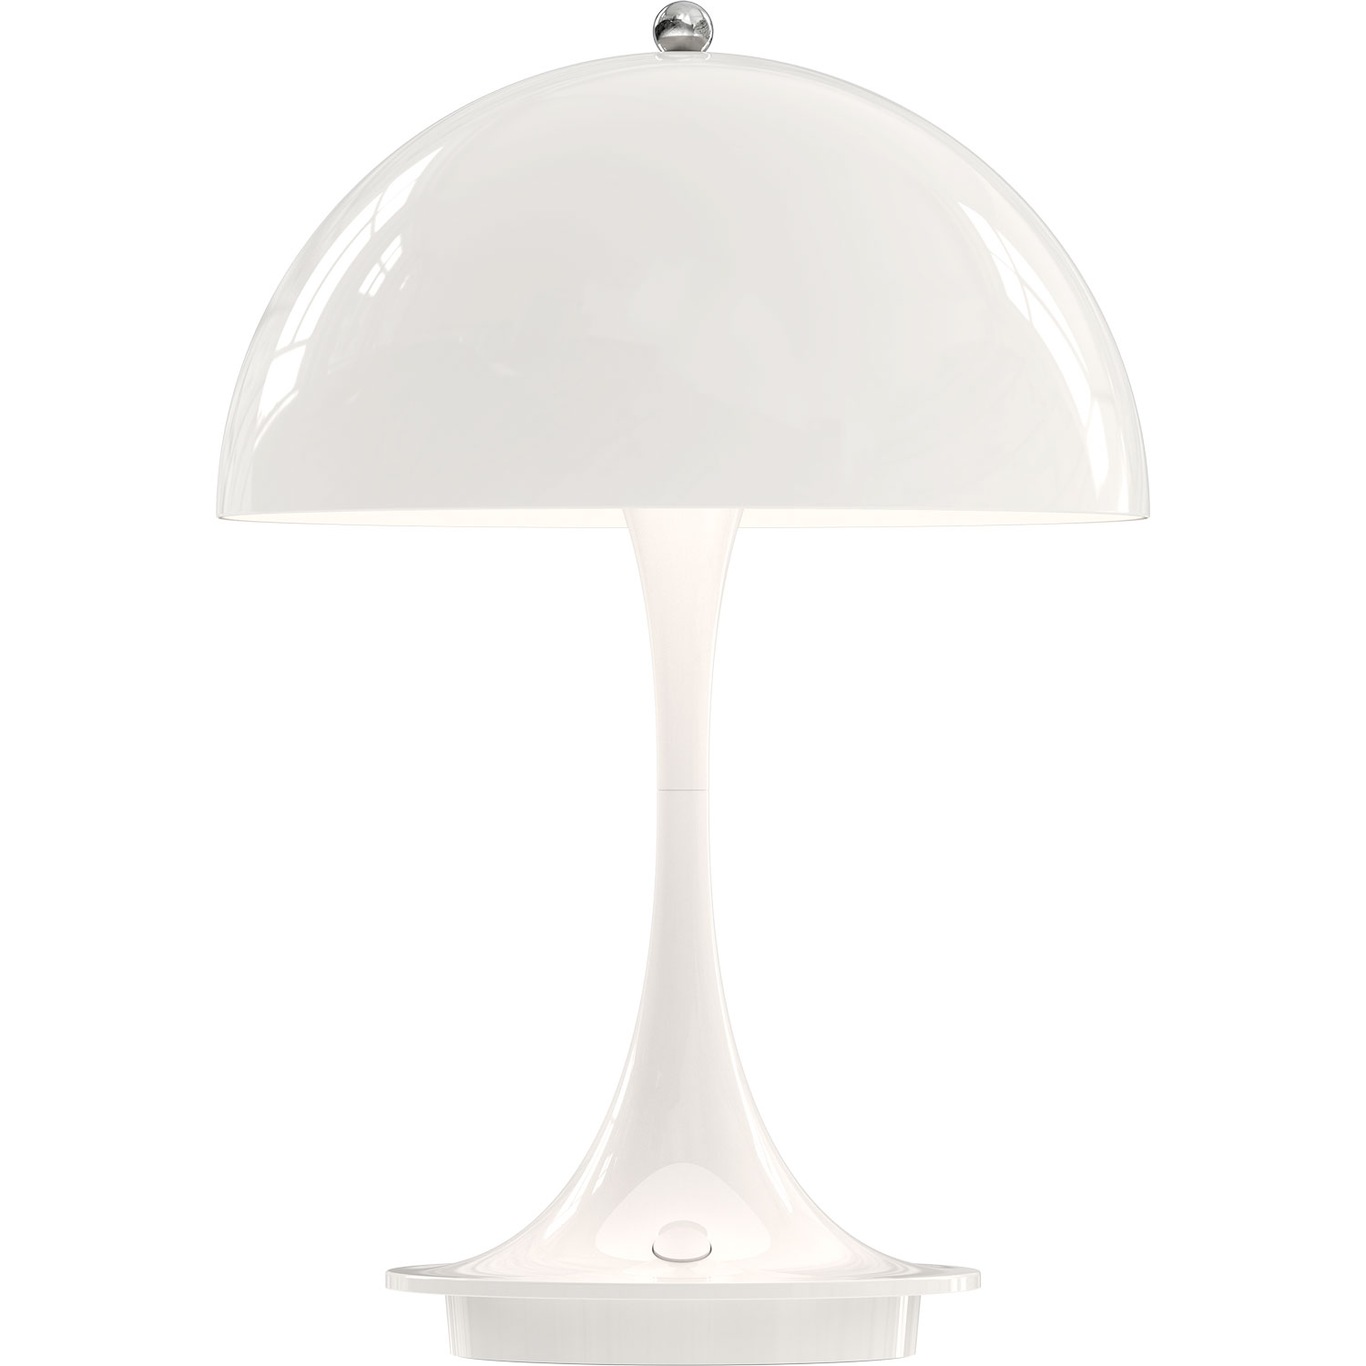 Panthella 160 Table Lamp Portable, White